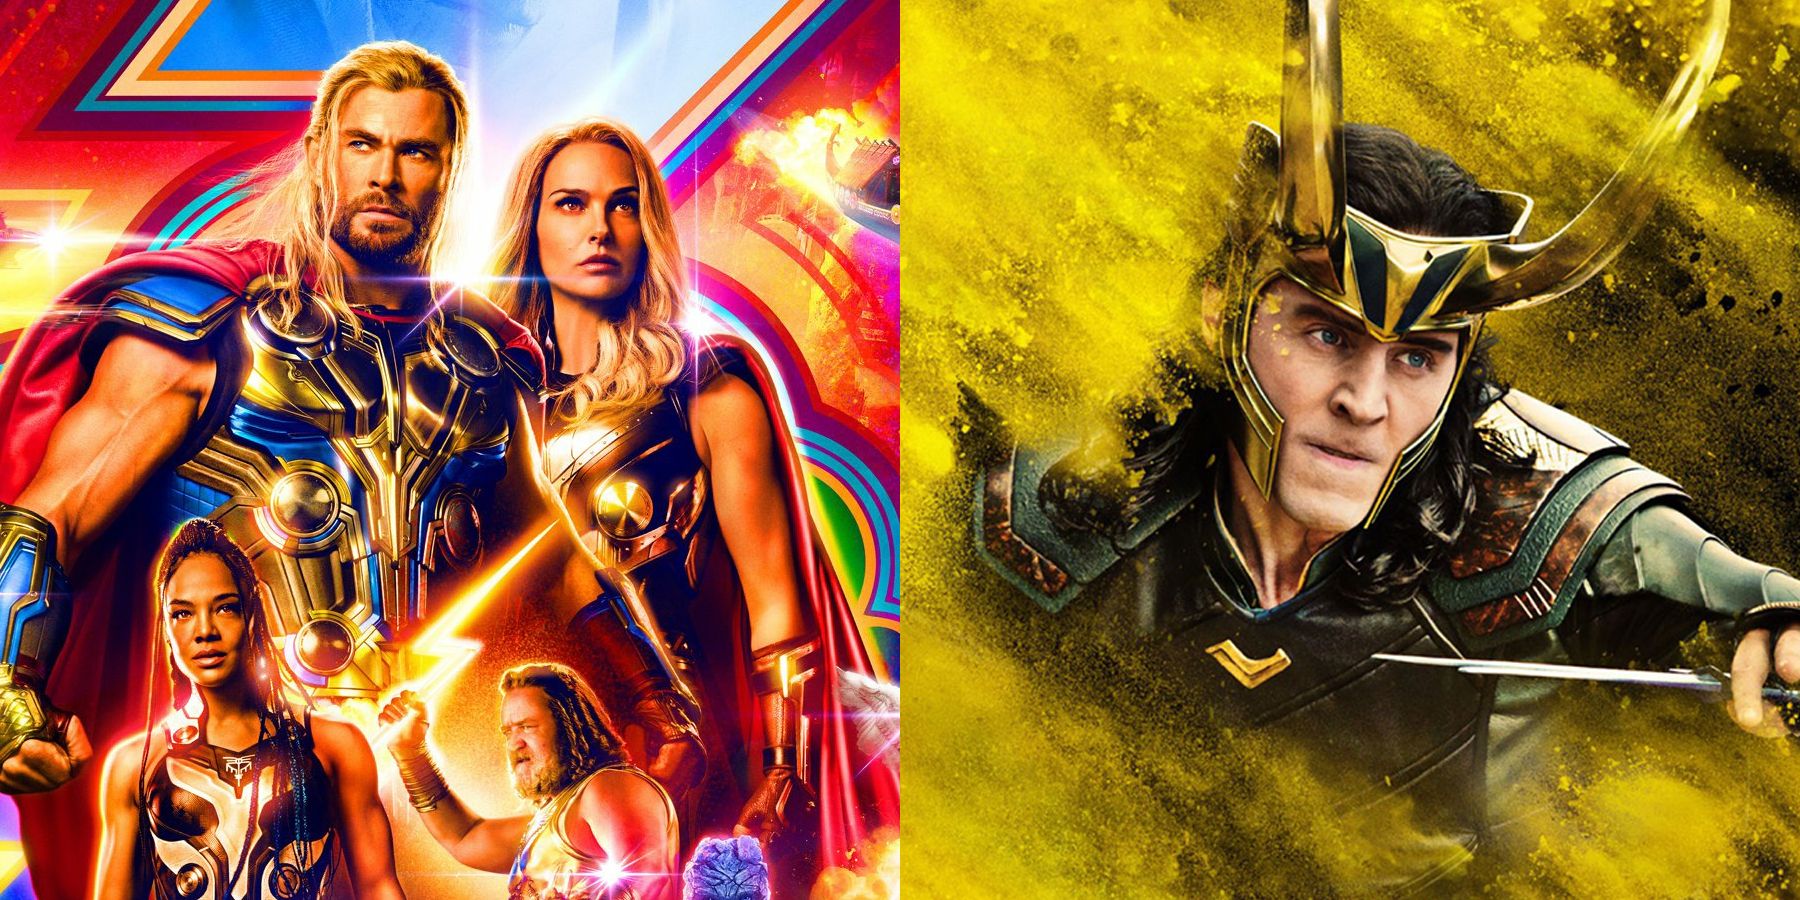 Universo Marvel 616: Para Chris Hemsworth e Taika Waititi, Loki